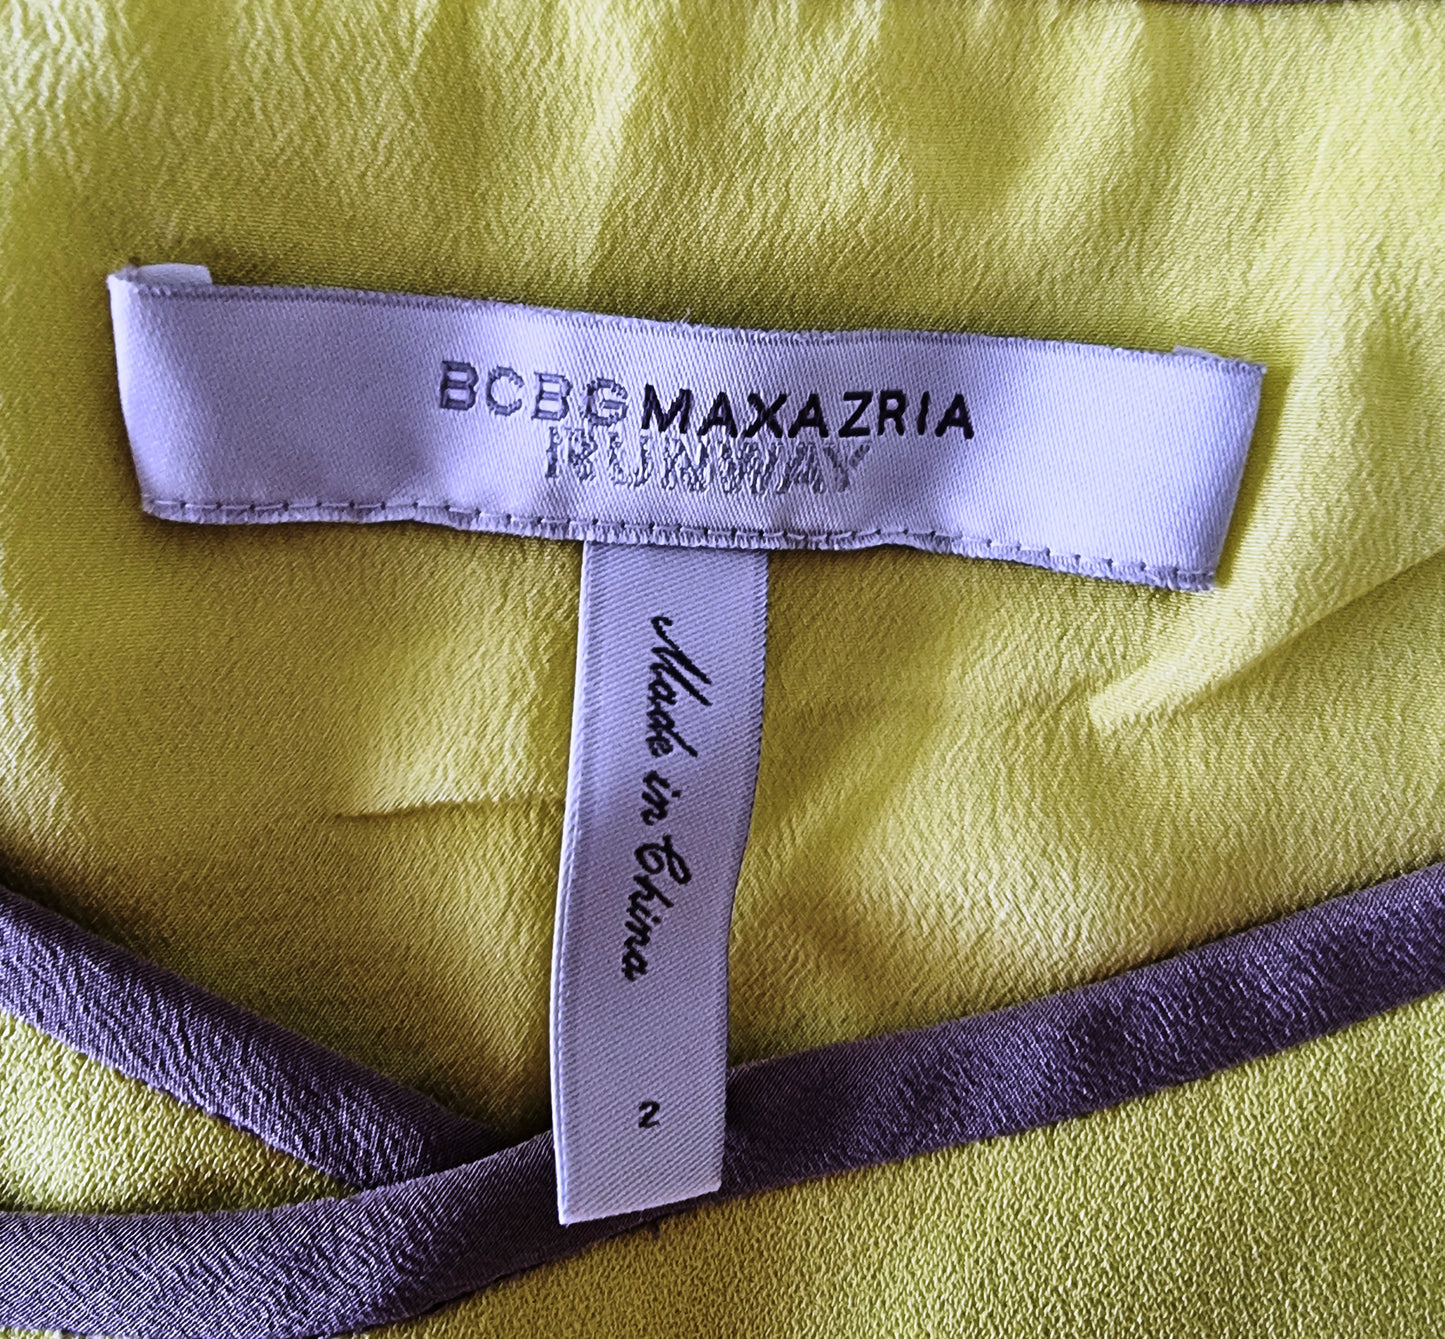 BCBG MAX AZRIA Lemonade Lined Gladiator Style Dress UK 6 US 2 EU 34 Timeless Fashions